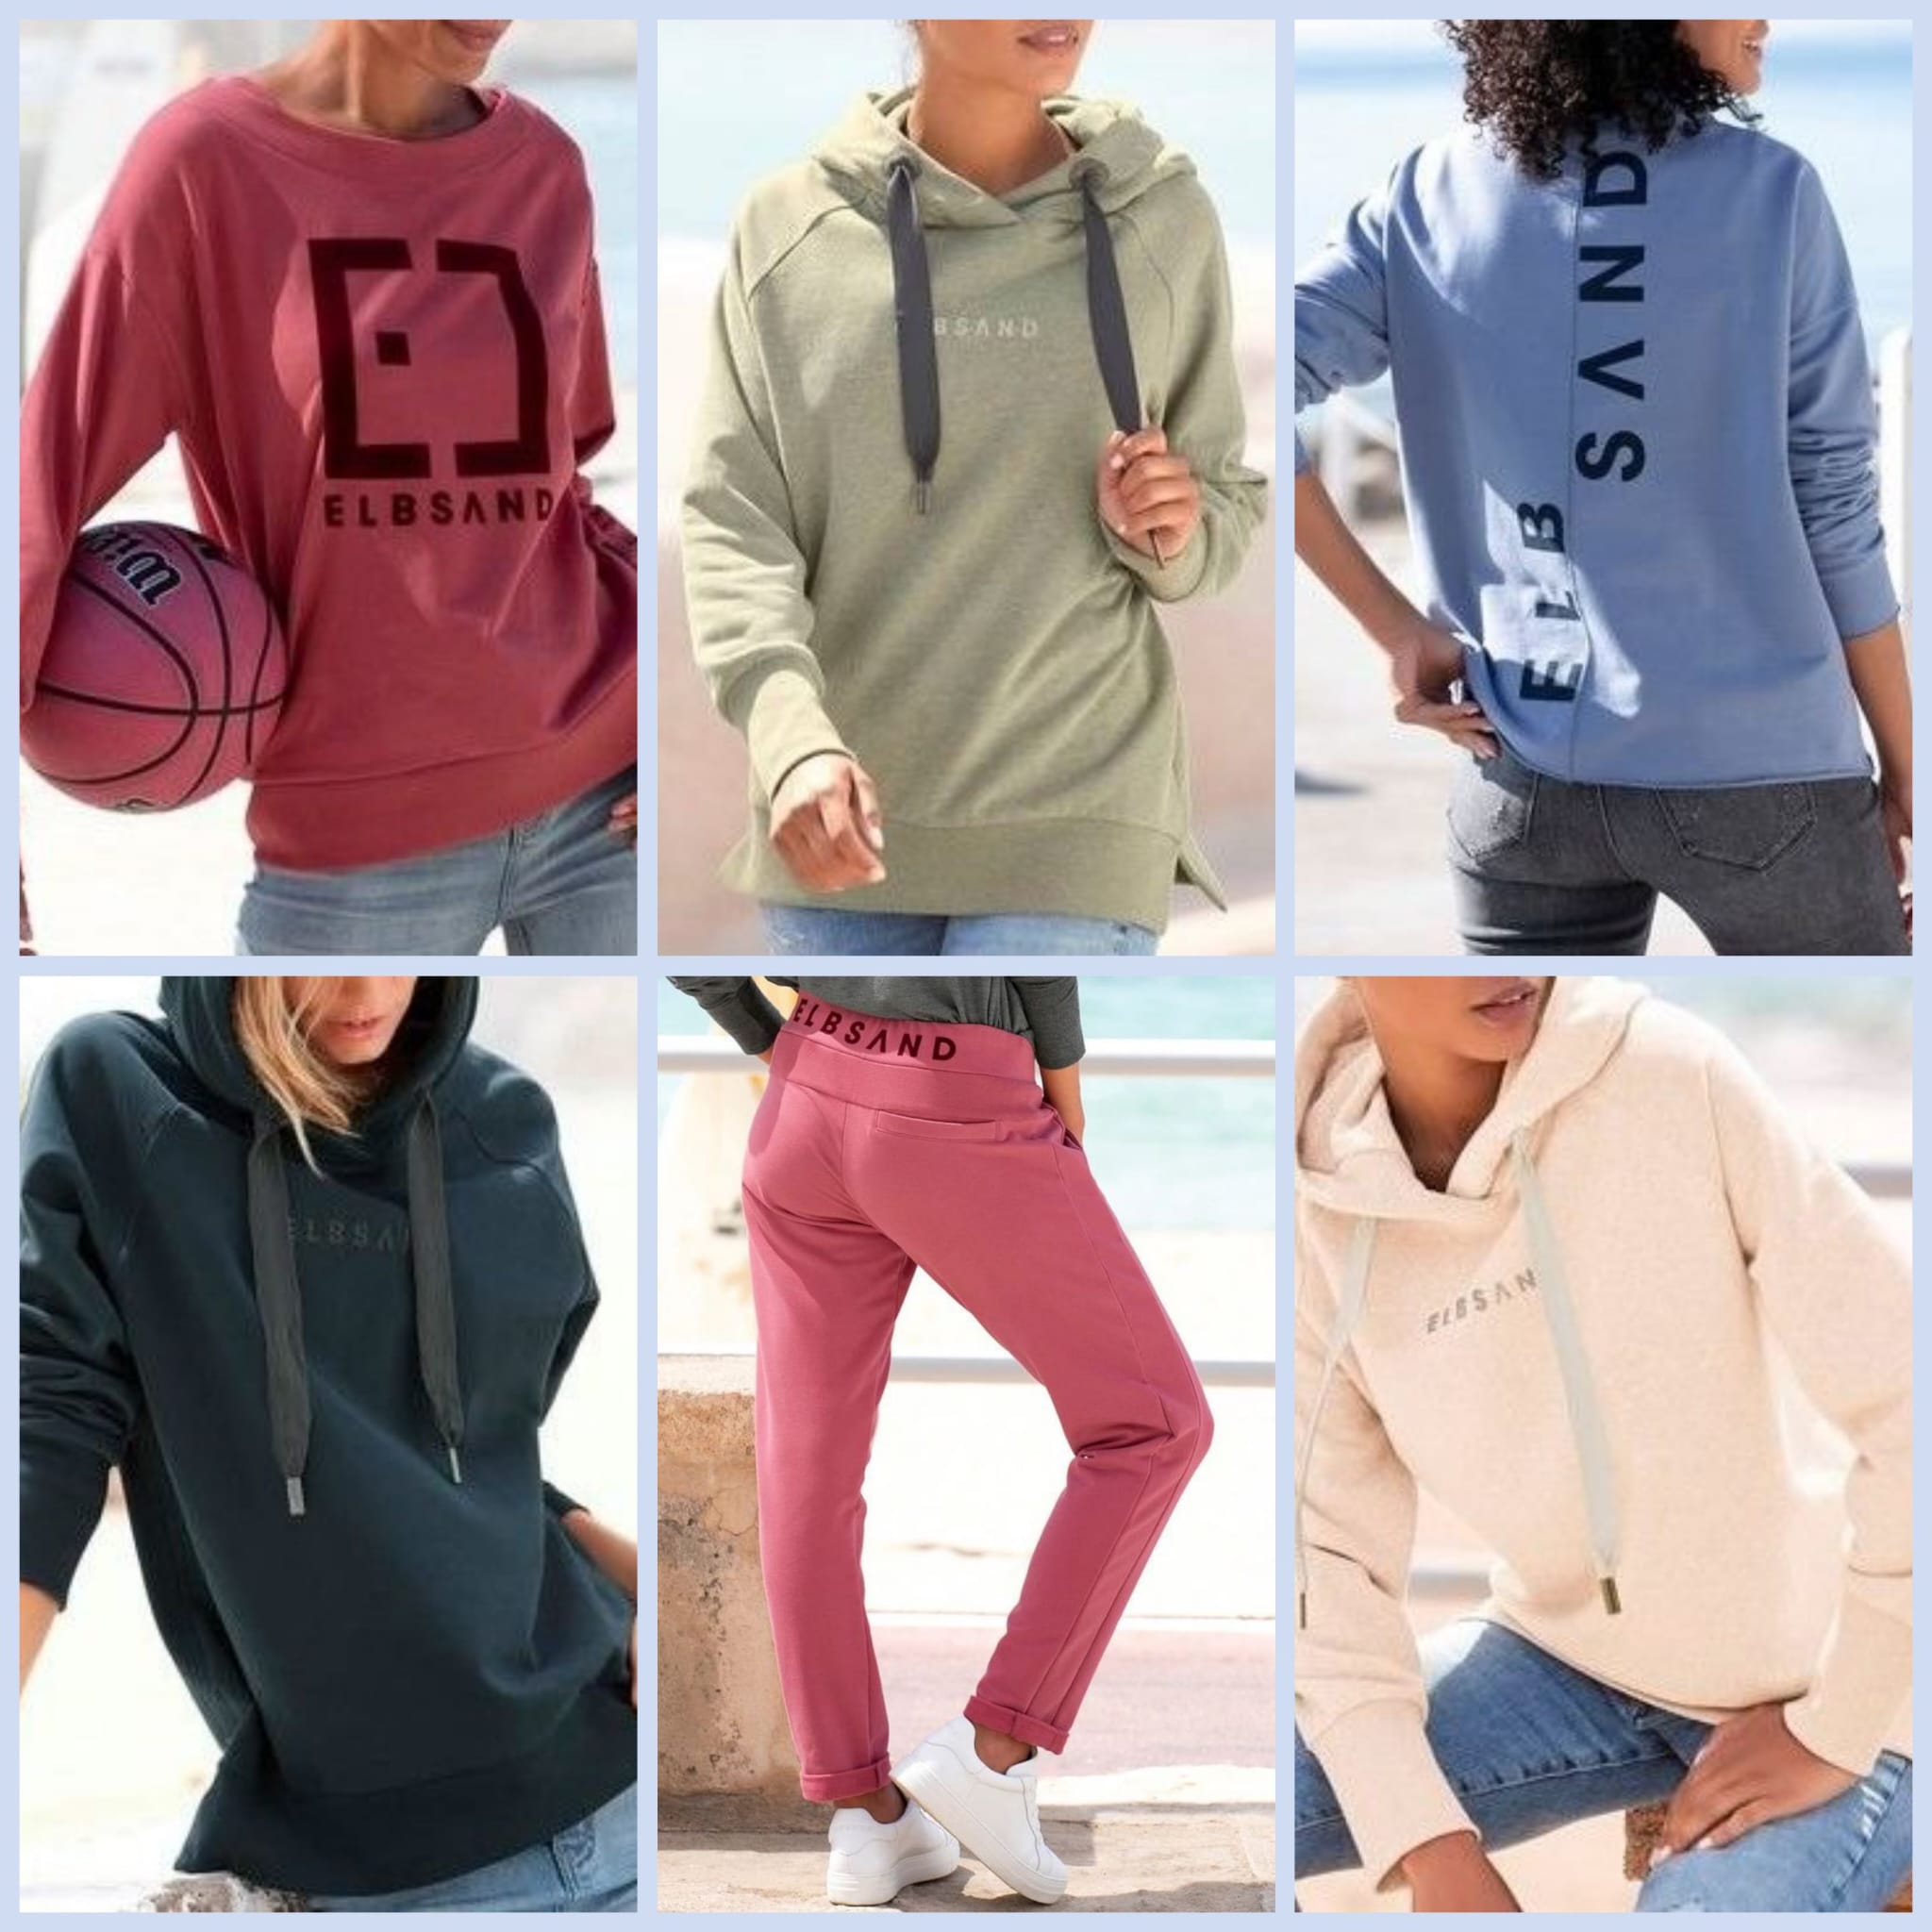 A mix of women's sportswear from Elbsand